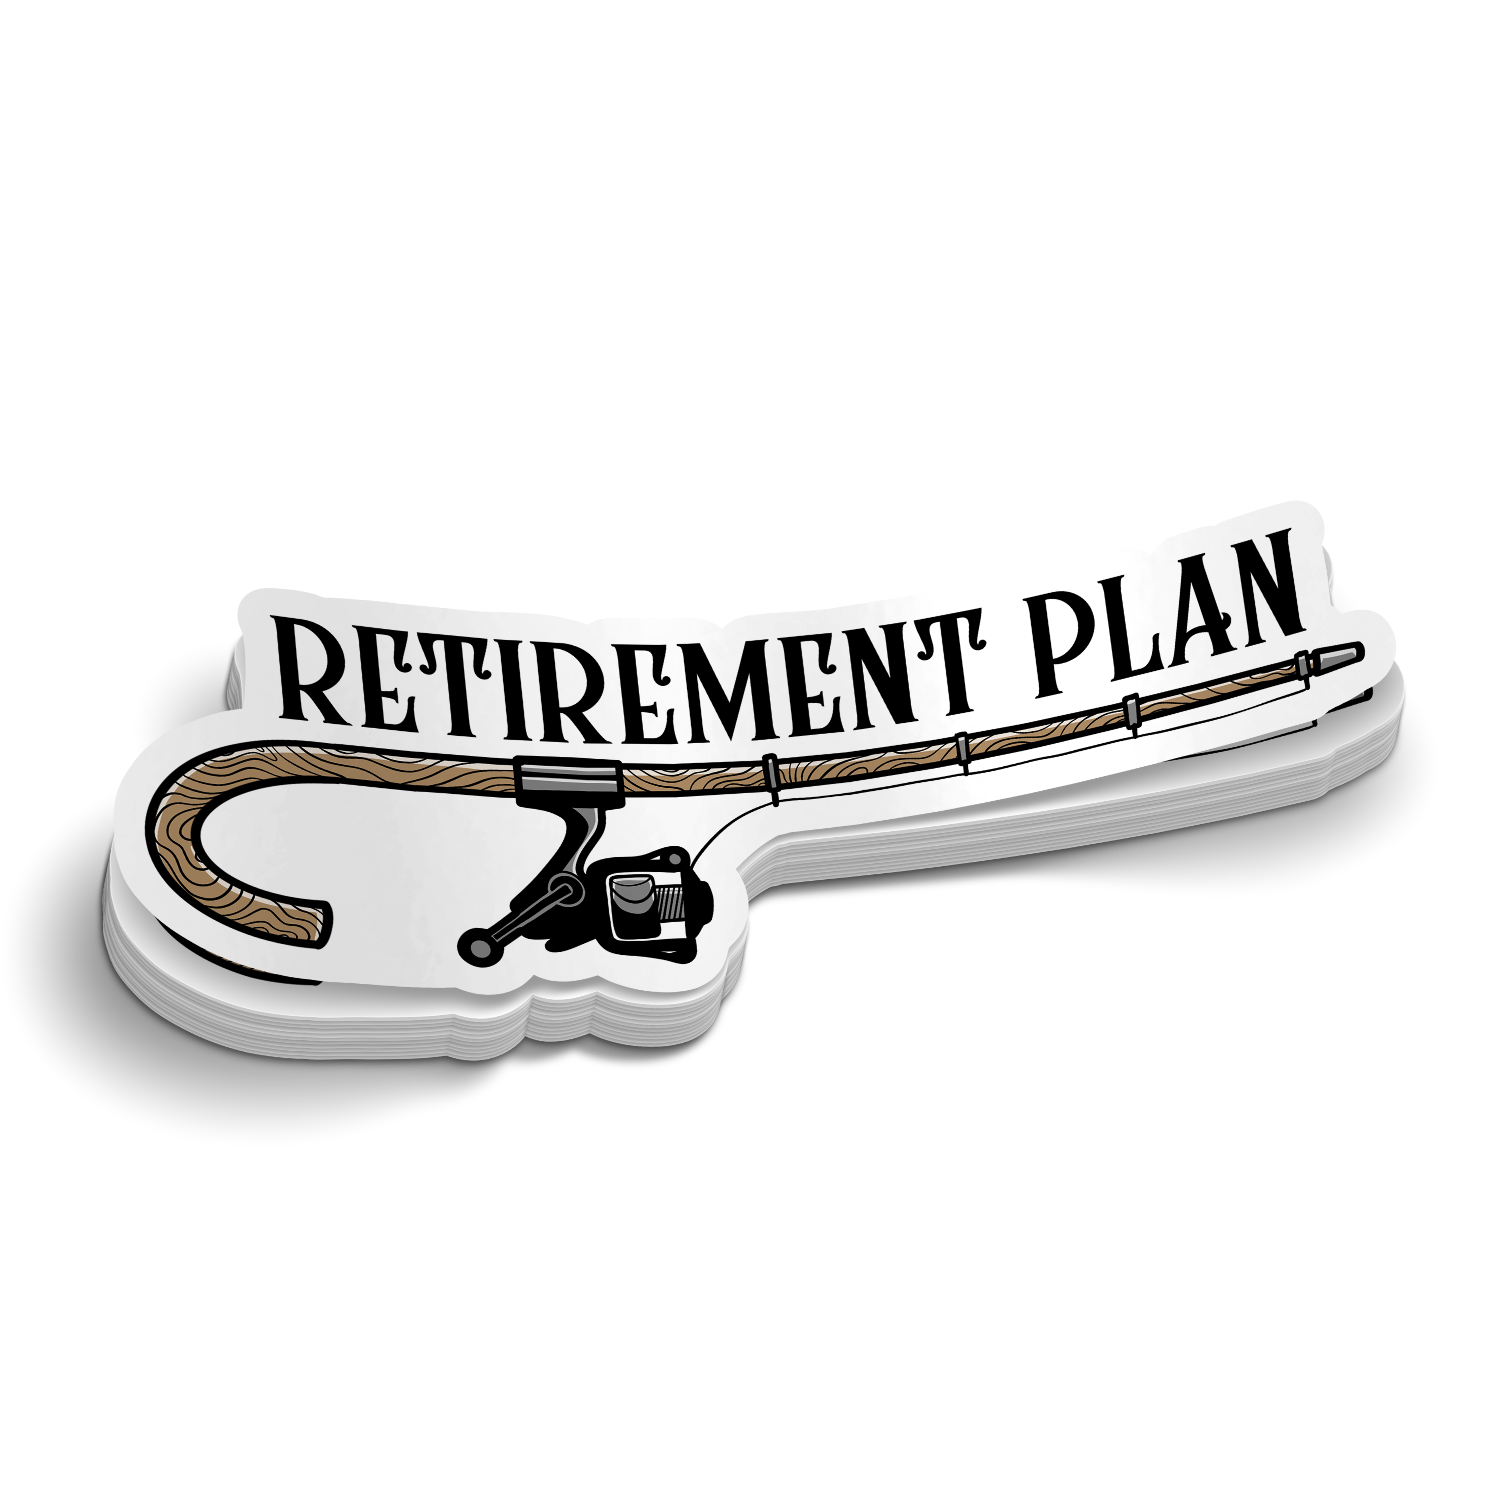 Retirement Plan - Funny Fishing Sticker